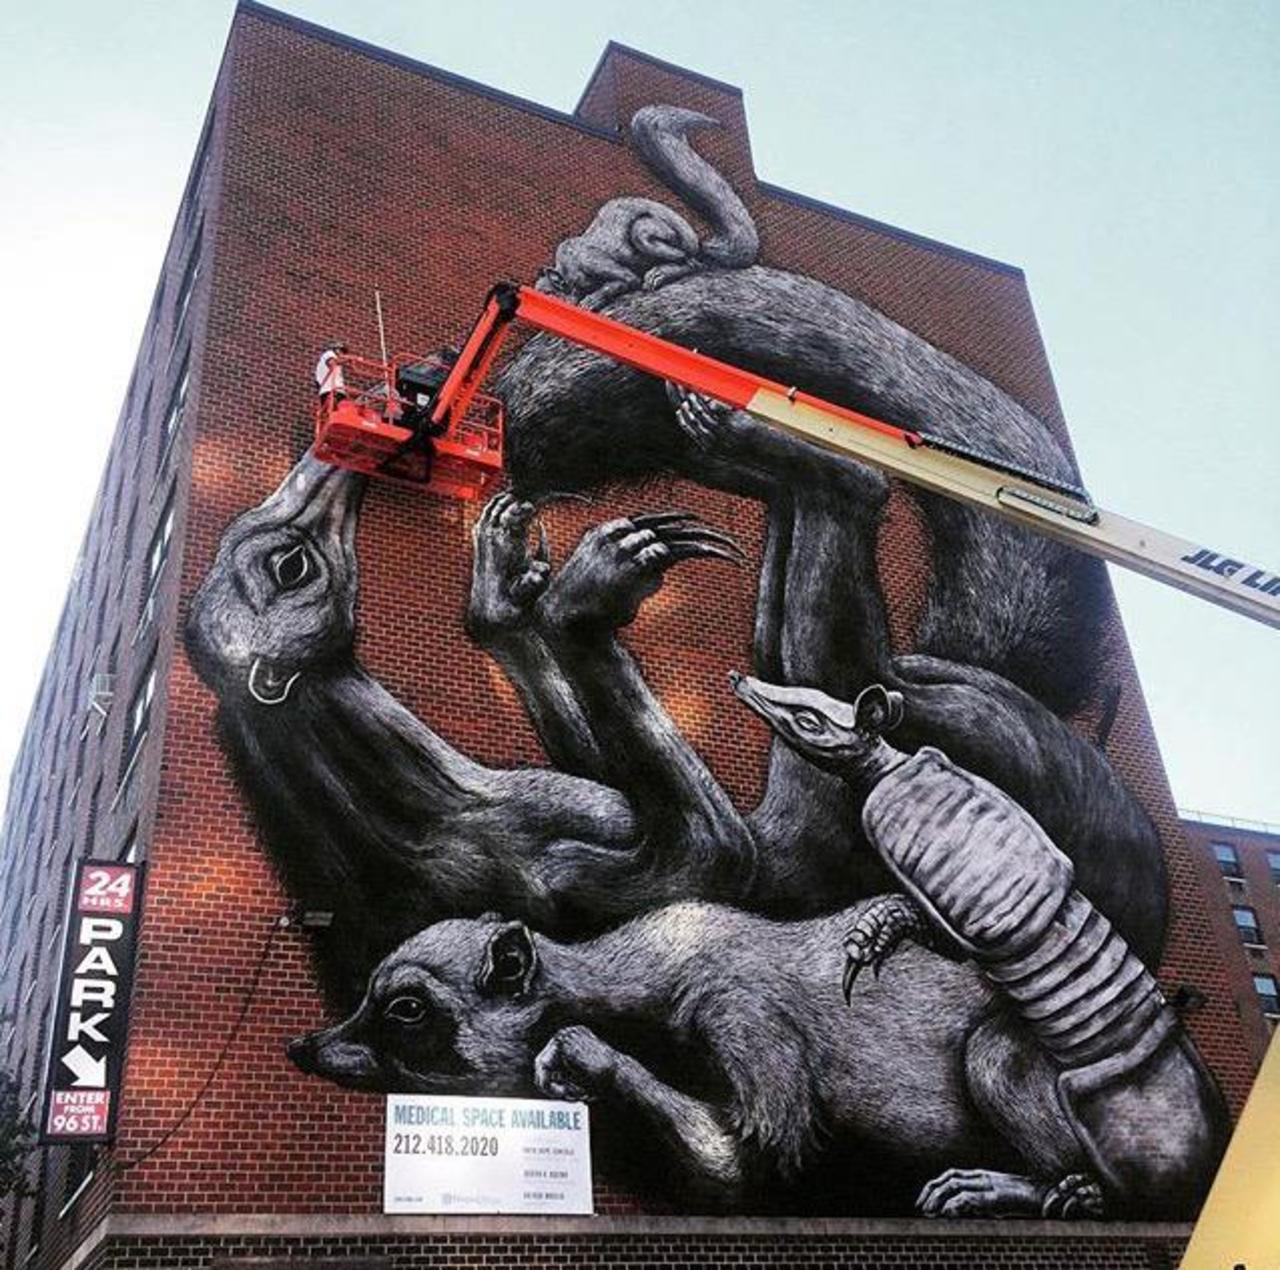 Street Art in progress by ROA in NYC

#art #graffiti #mural #streetart http://t.co/zYRMXt3Cd4